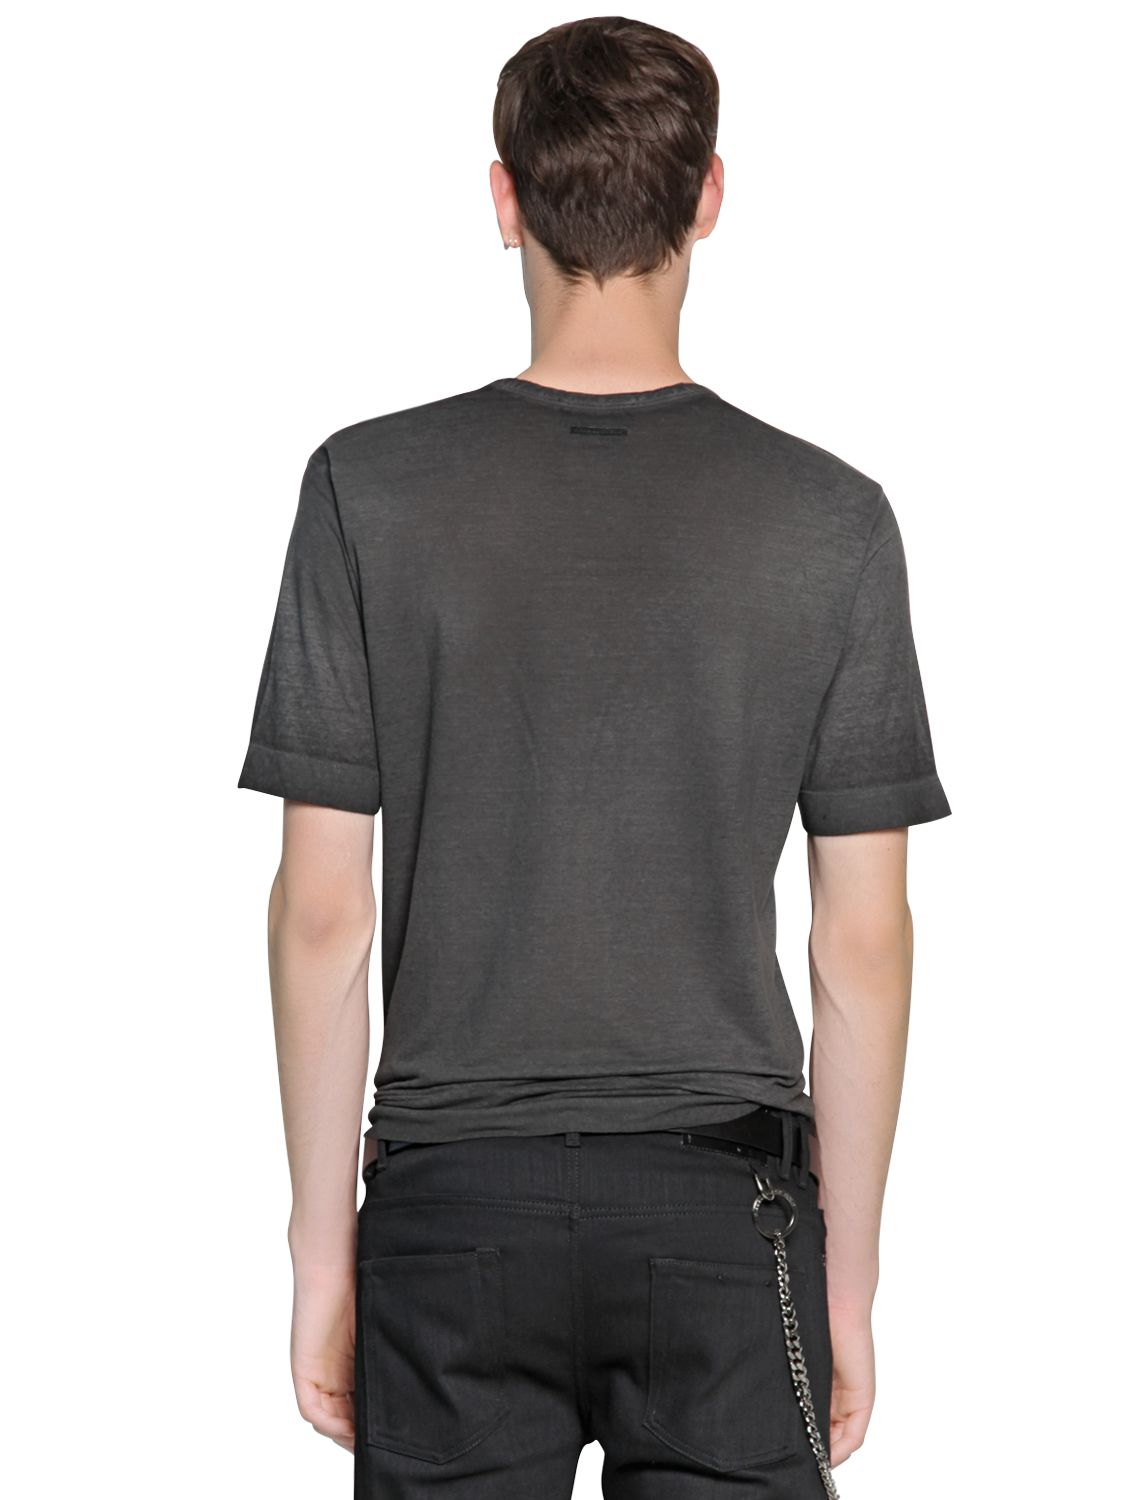 Lyst - Diesel Black Gold Fade Effect Light Cotton T-Shirt in Gray for Men